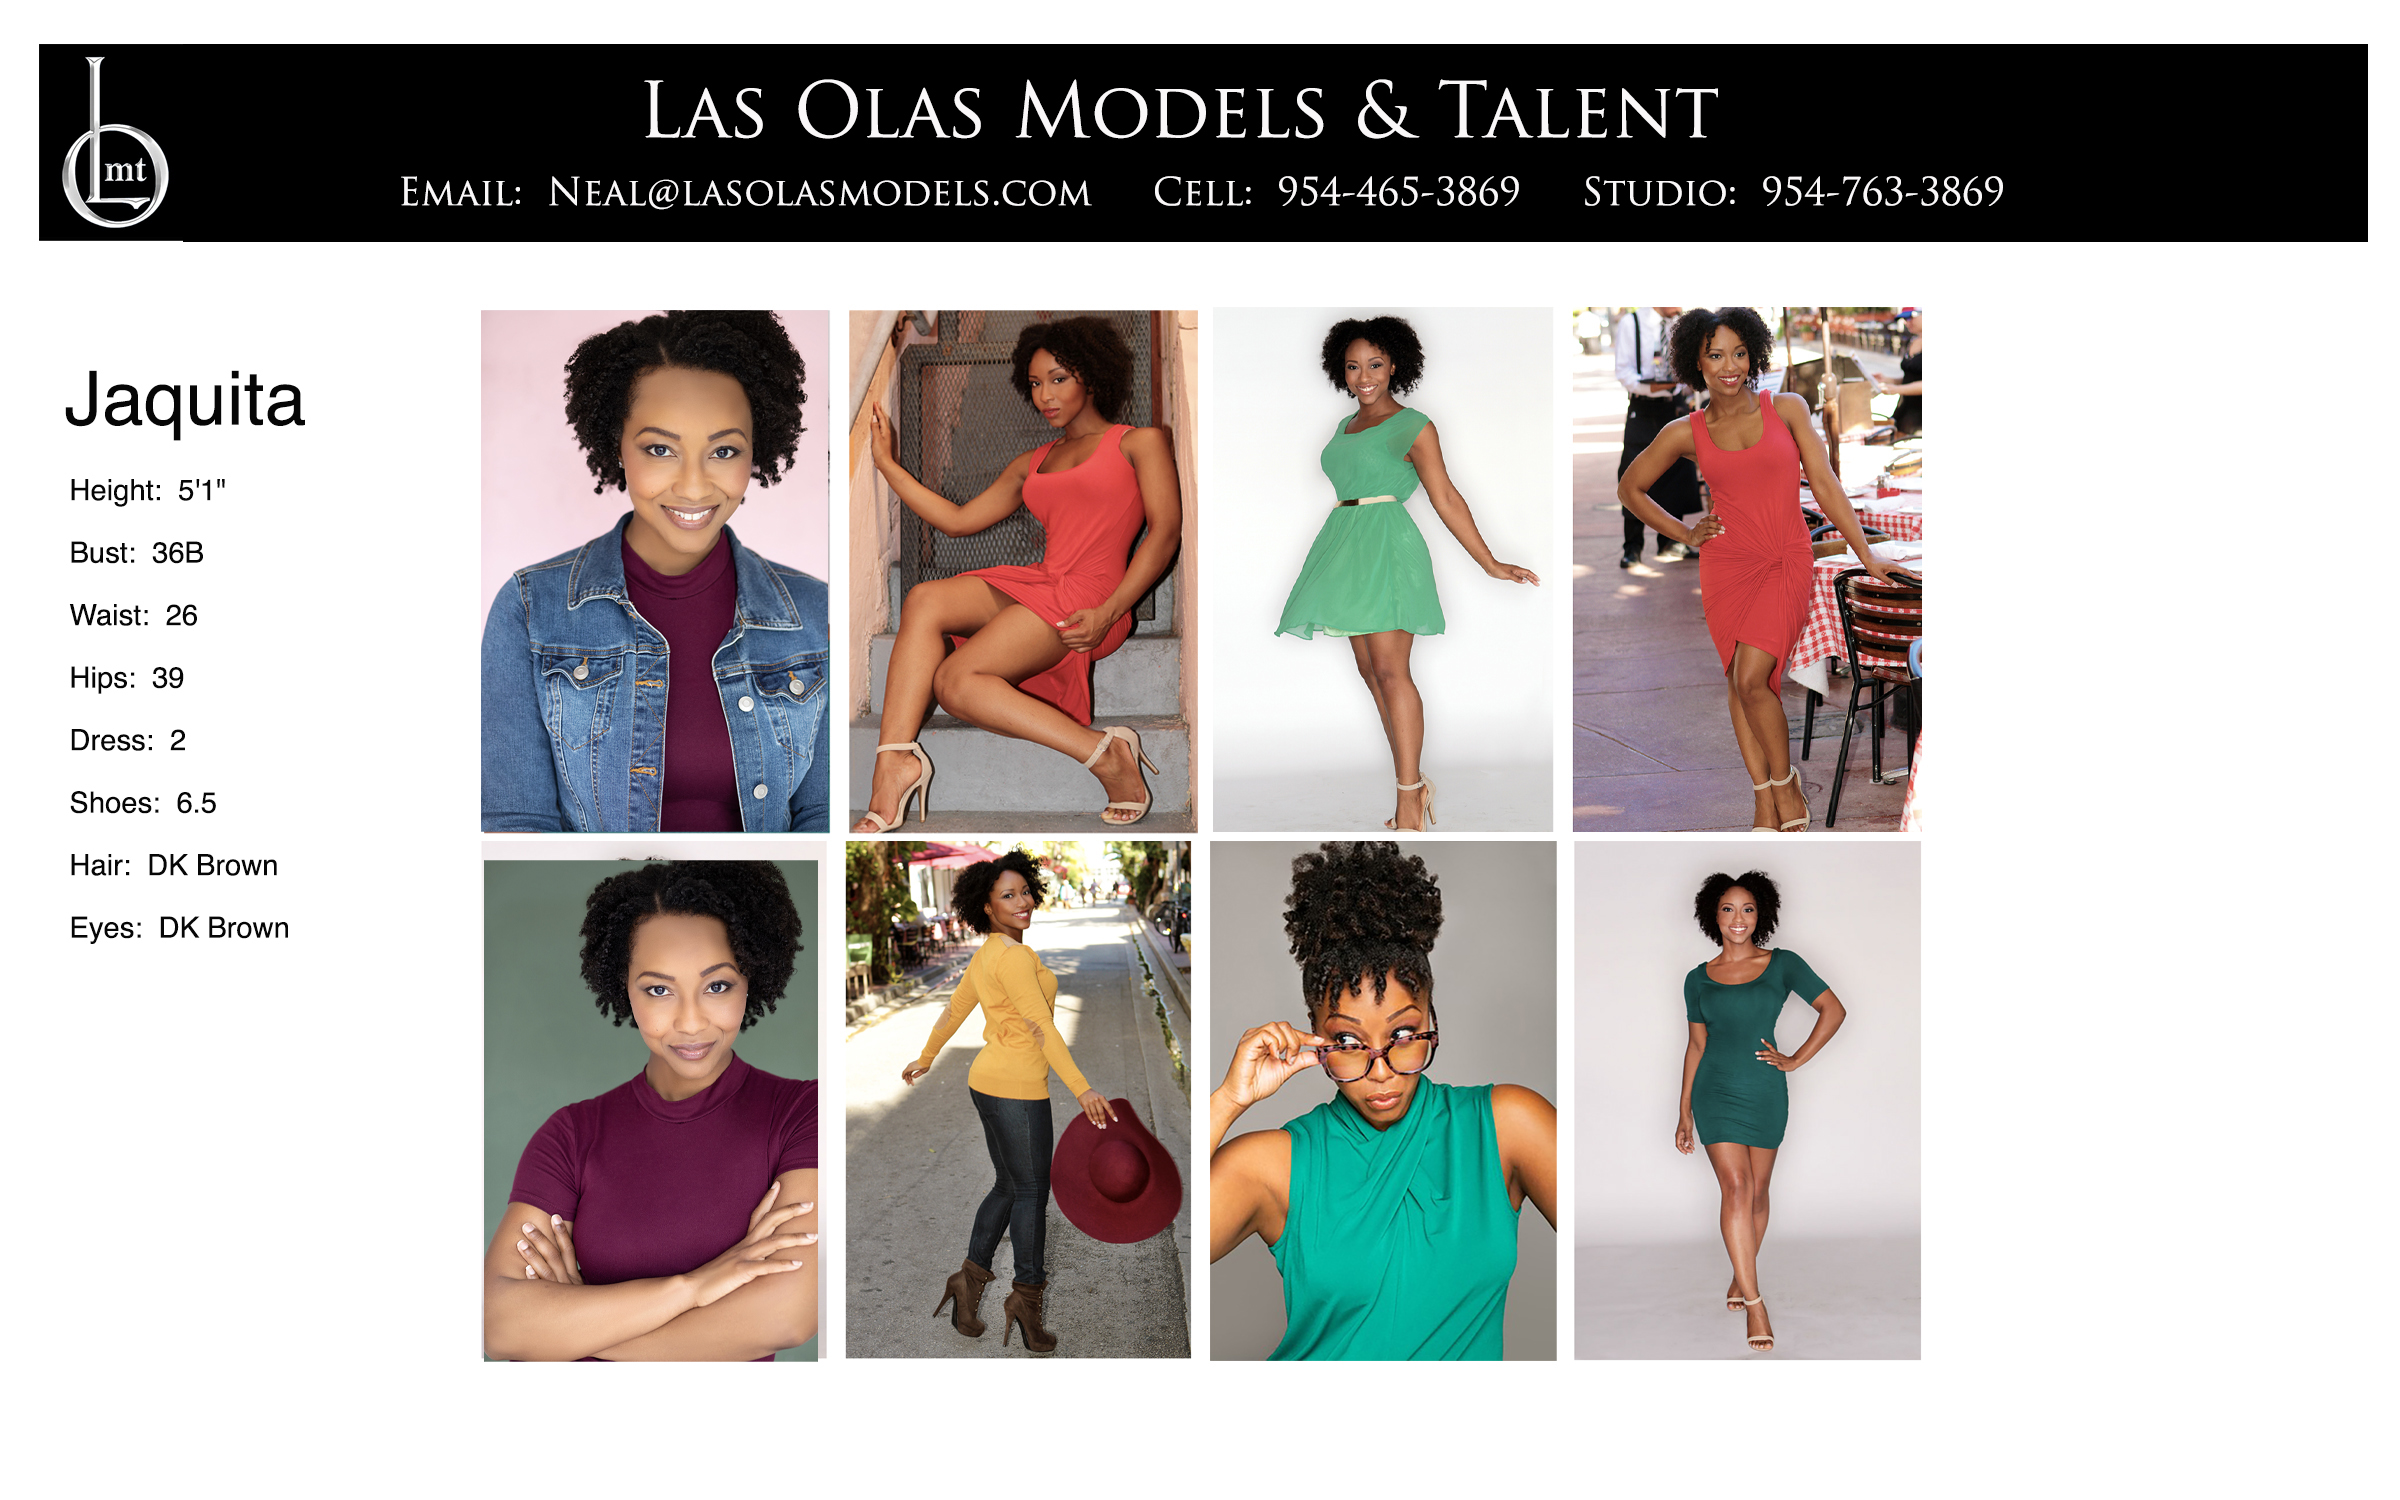 Model Fort Lauderdale Miami South Florida Print Commercial Video Promotion. Las Olas Models & Talent - Jaquita Comp